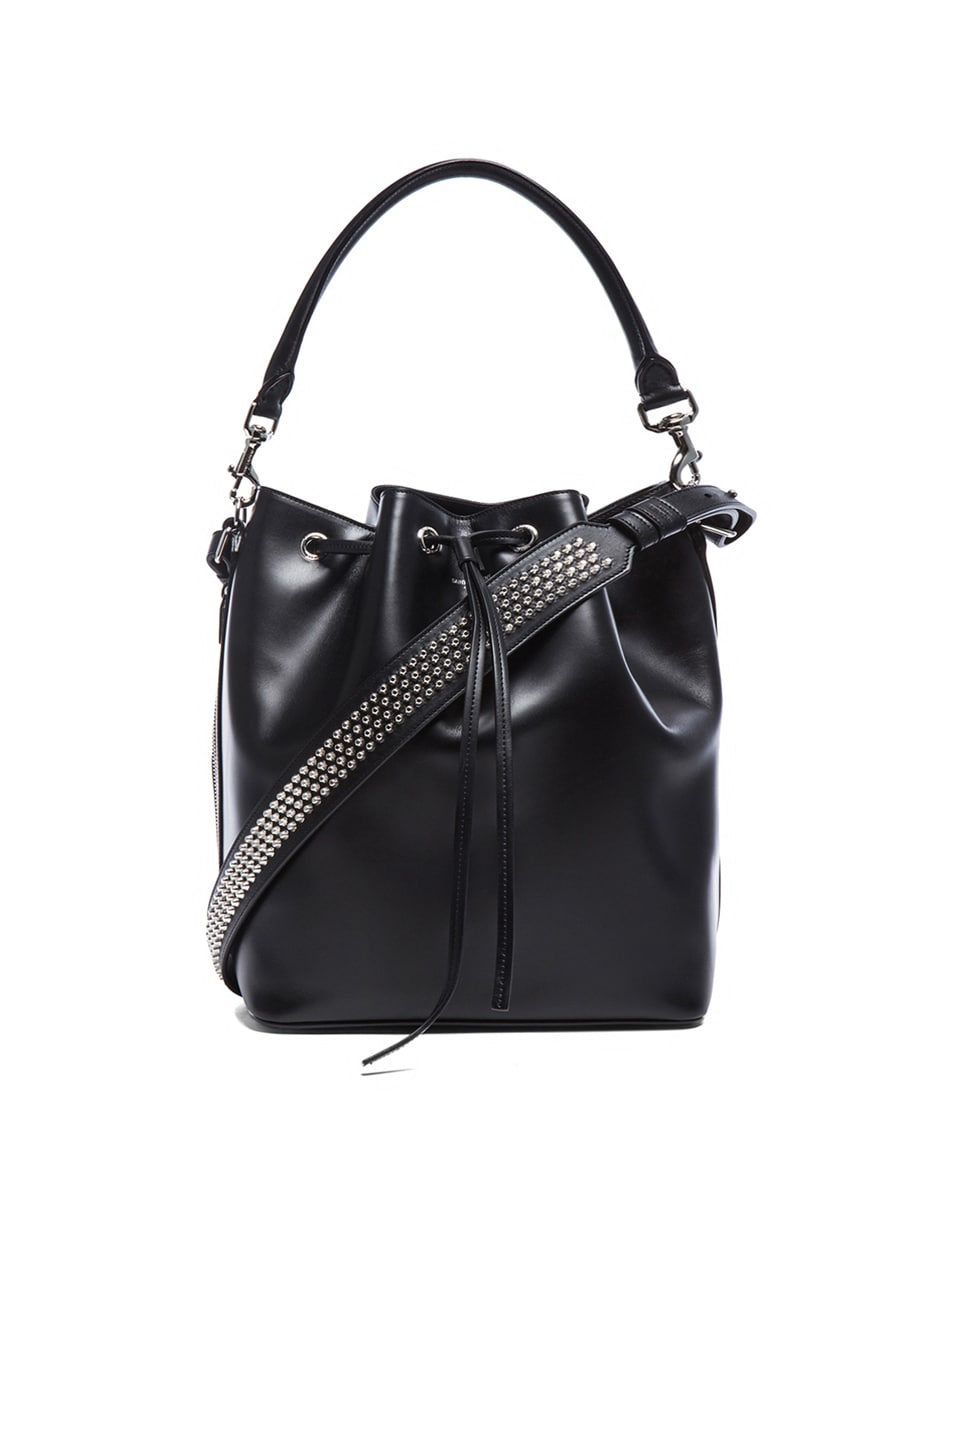 Saint Laurent Studded Medium Bucket Bag in Black | FWRD